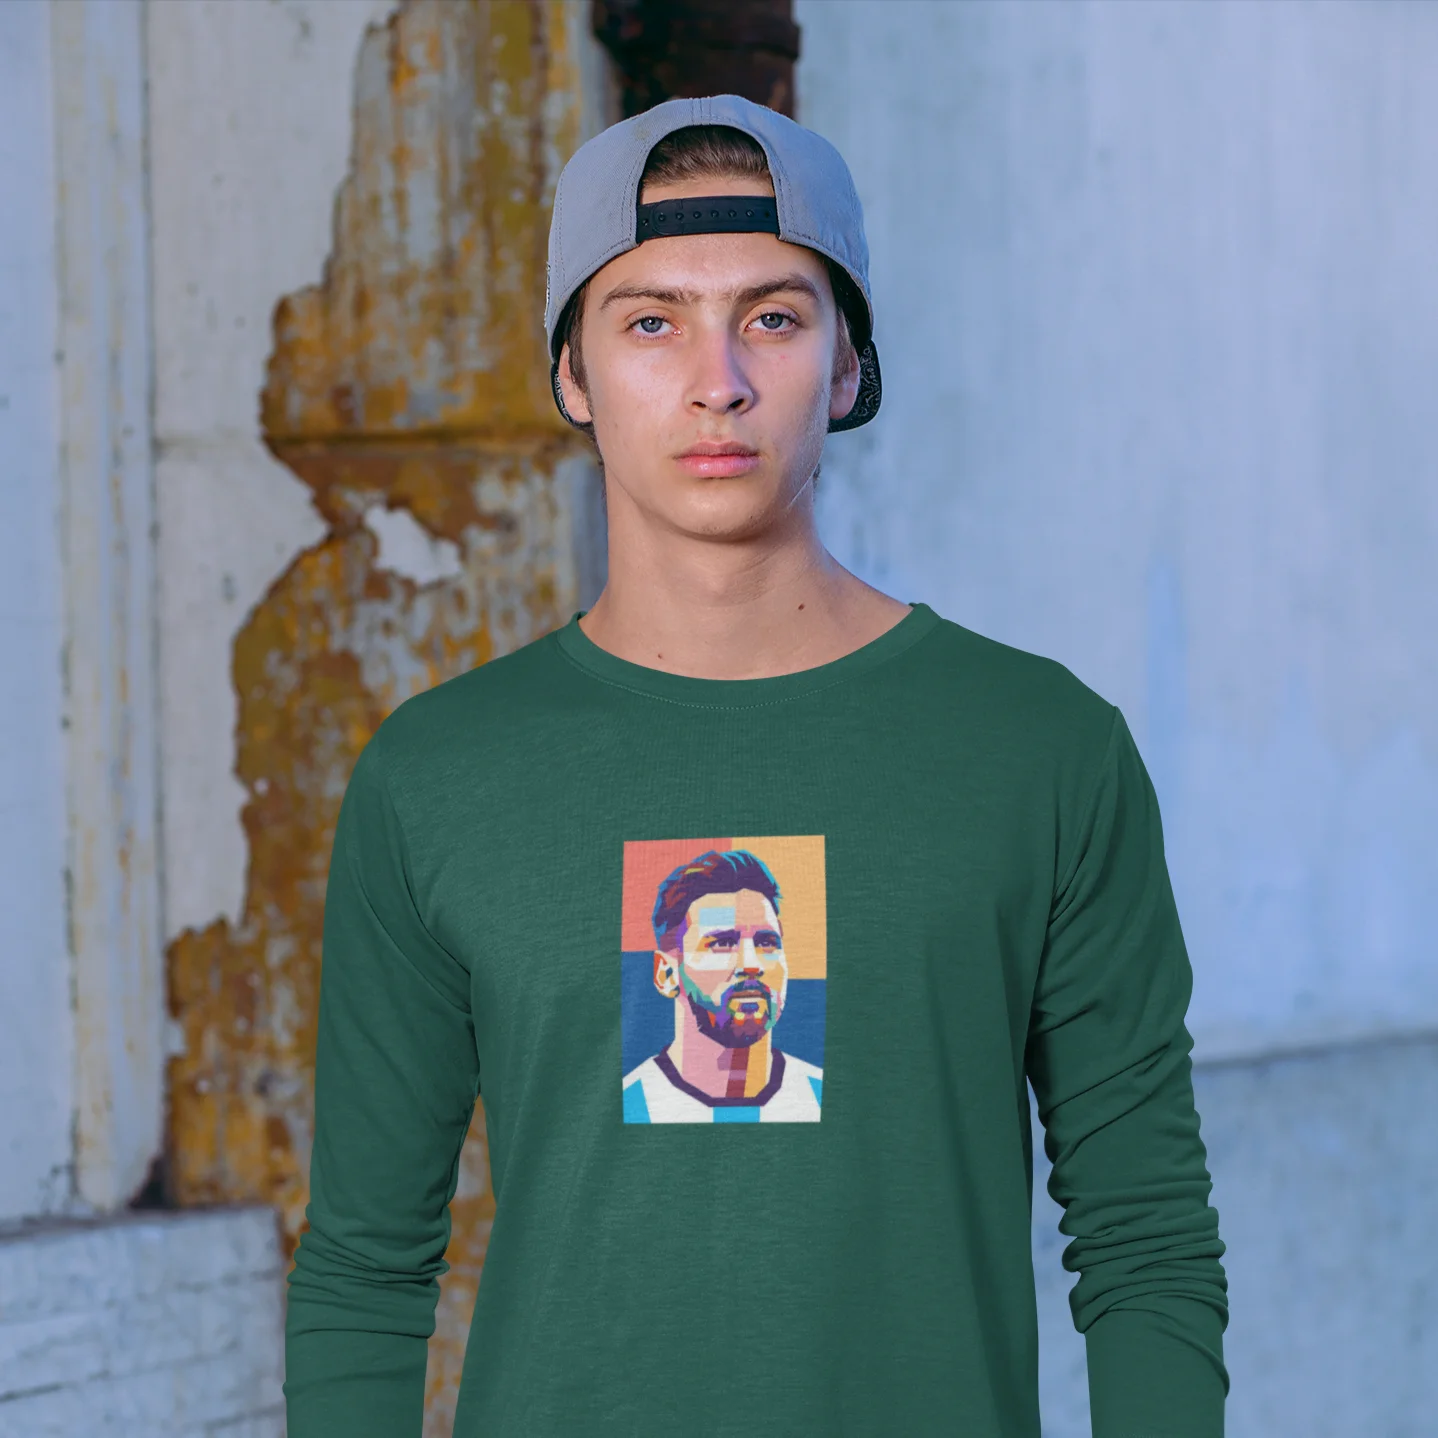 Messi T-Shirt